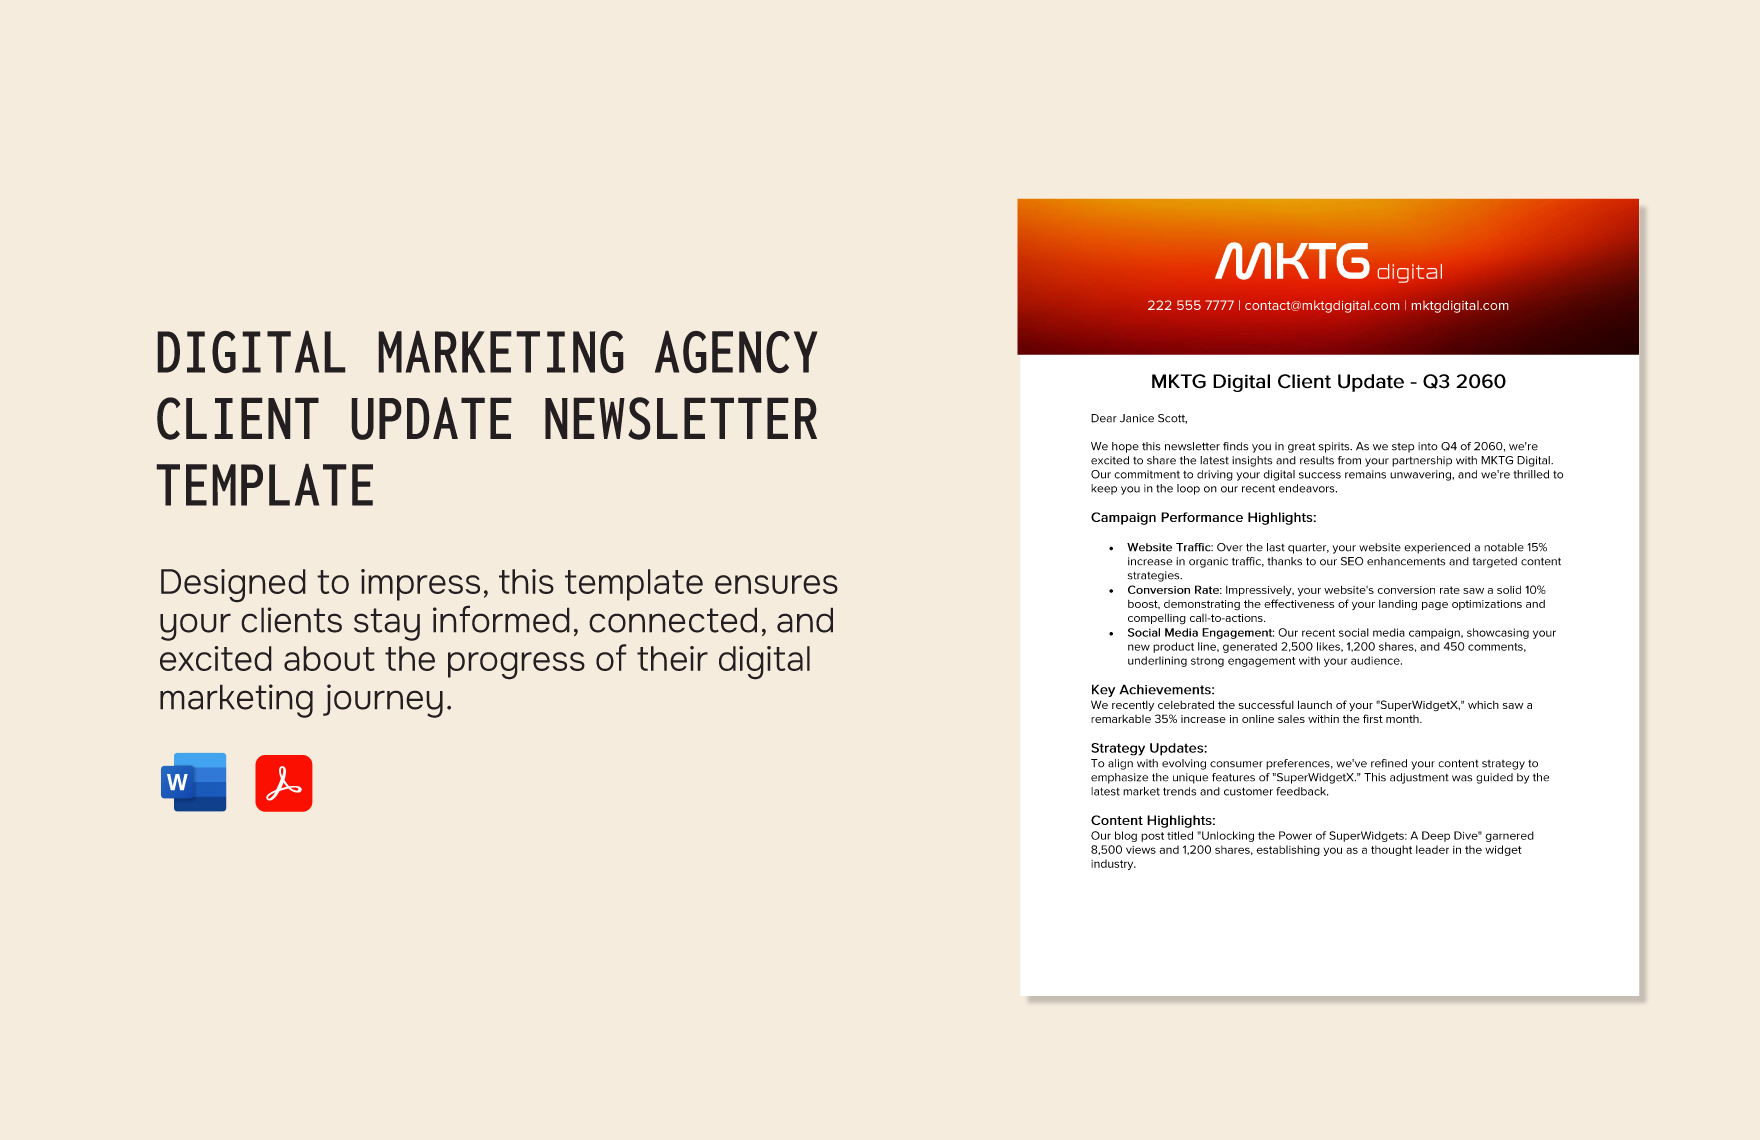 Digital Marketing Agency Client Update Newsletter Template